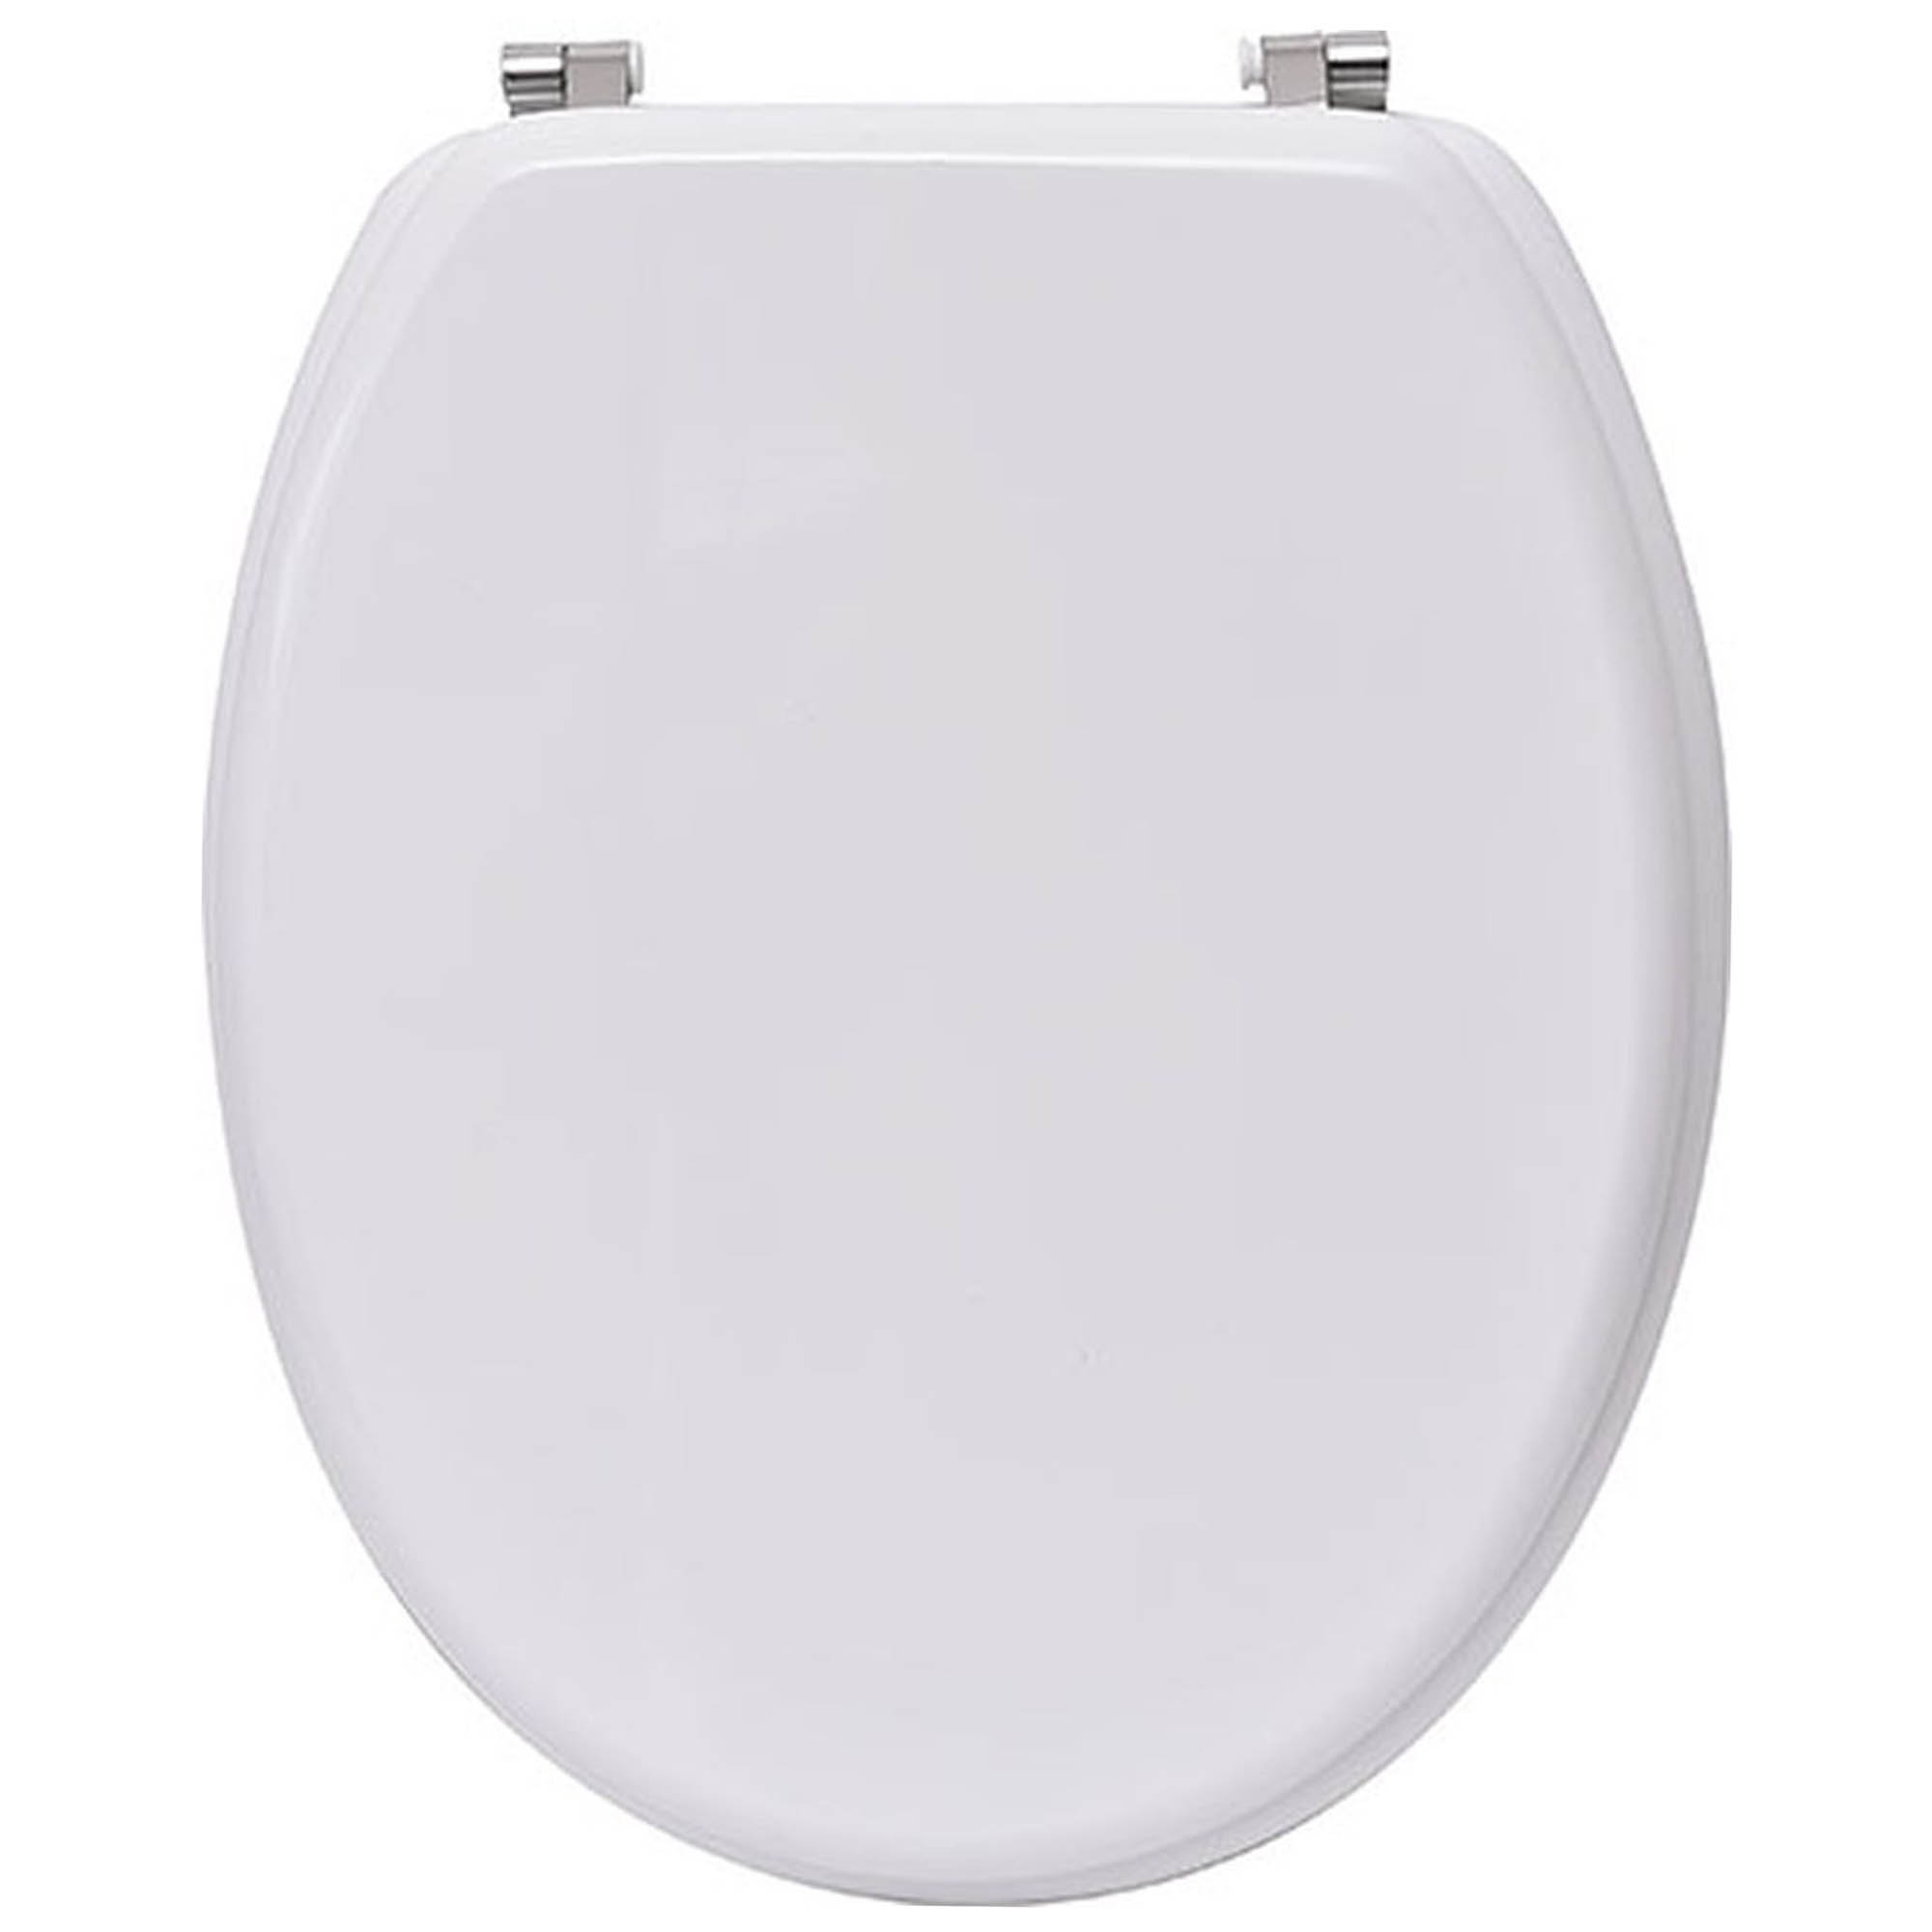 EVIDECO Oval Elongated Toilet Seat Design Pinky Adjustable Zinc Hinges White